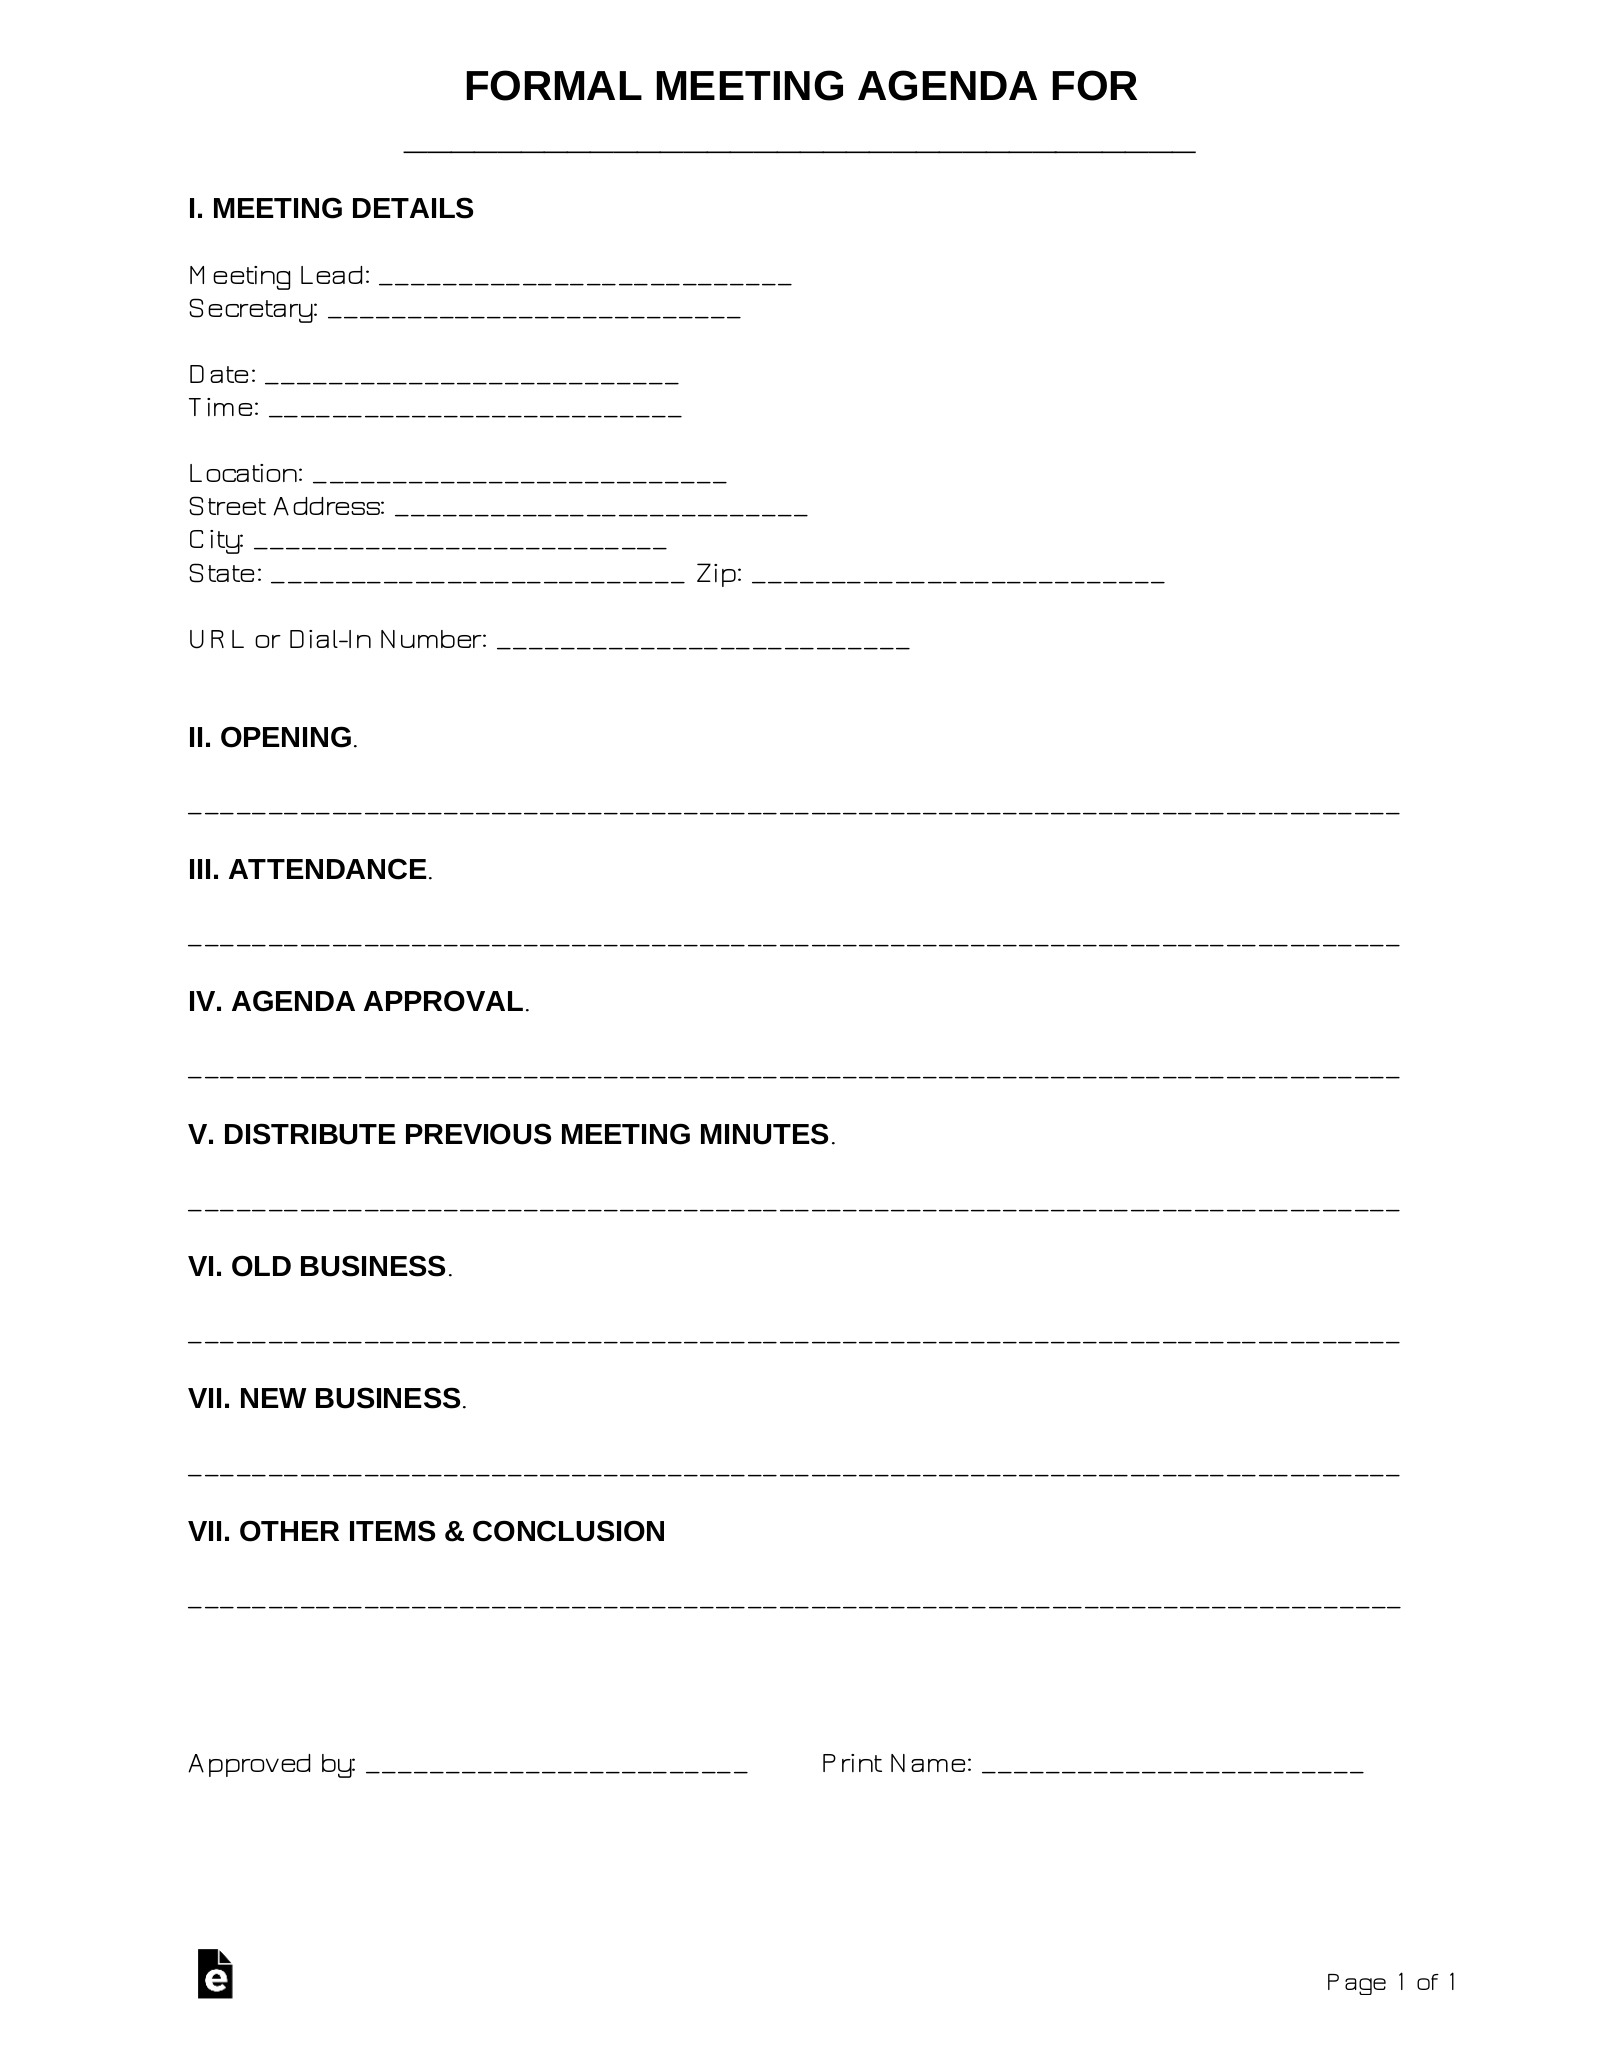 free-formal-meeting-agenda-template-sample-pdf-word-eforms